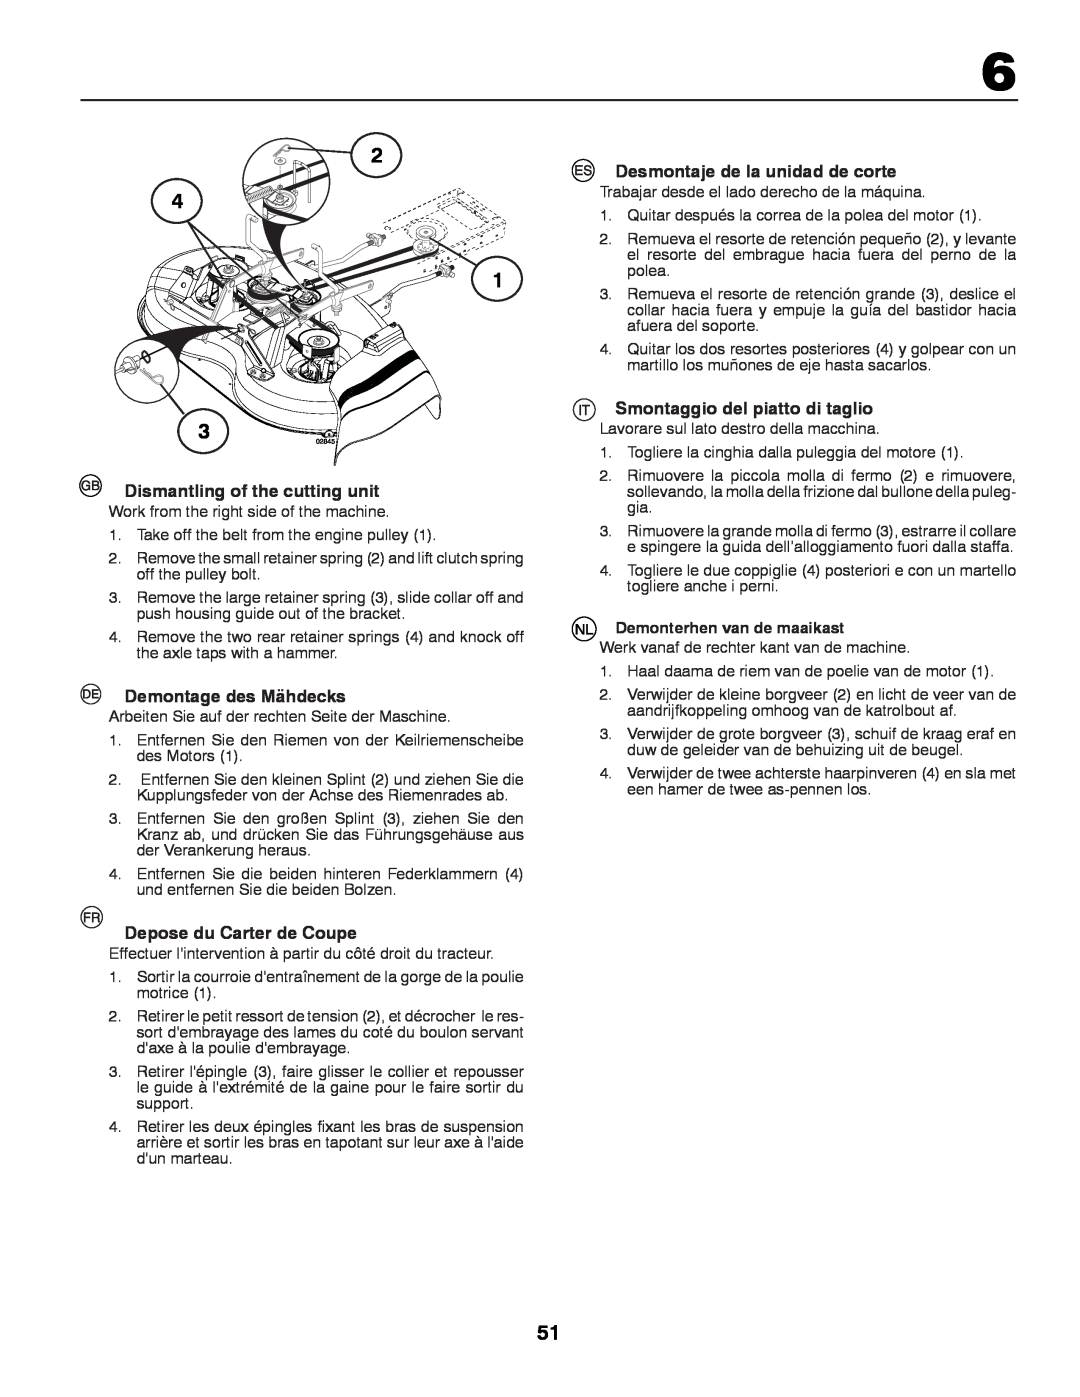 Husqvarna LT131 instruction manual Dismantling of the cutting unit, Demontage des Mähdecks, Depose du Carter de Coupe 